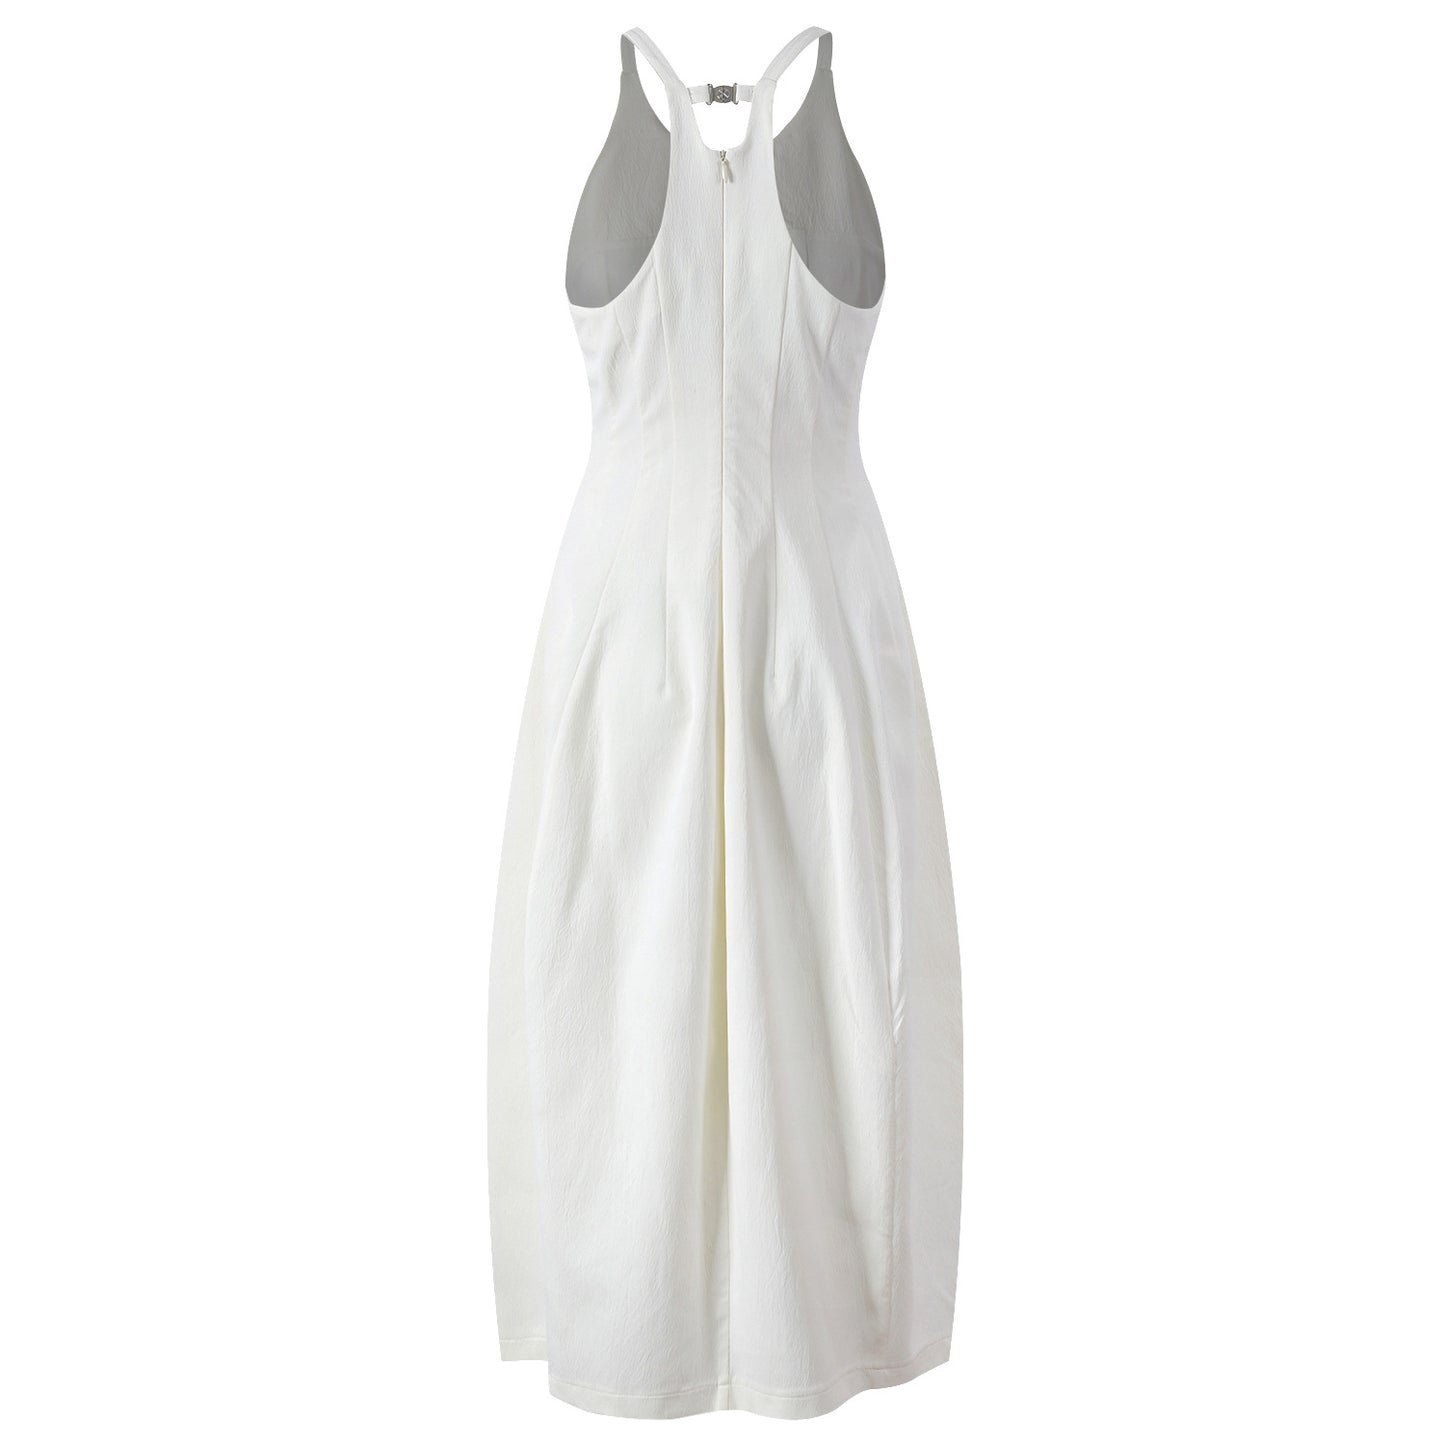 Zara white dress